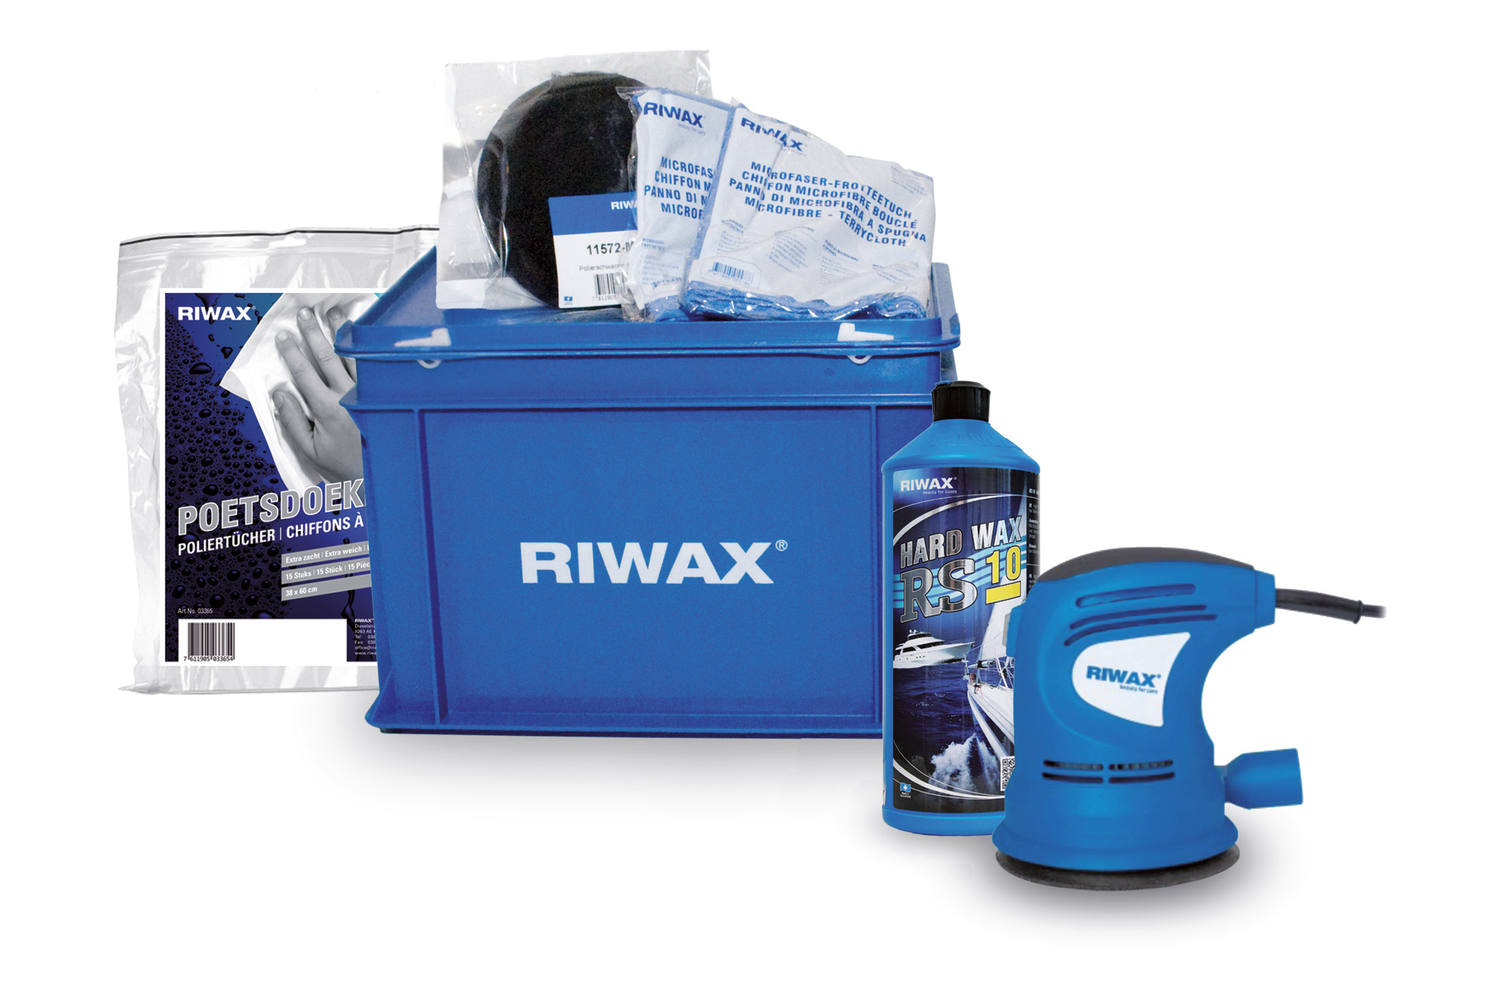 Riwax Glanspakket 3 (gevulde box)